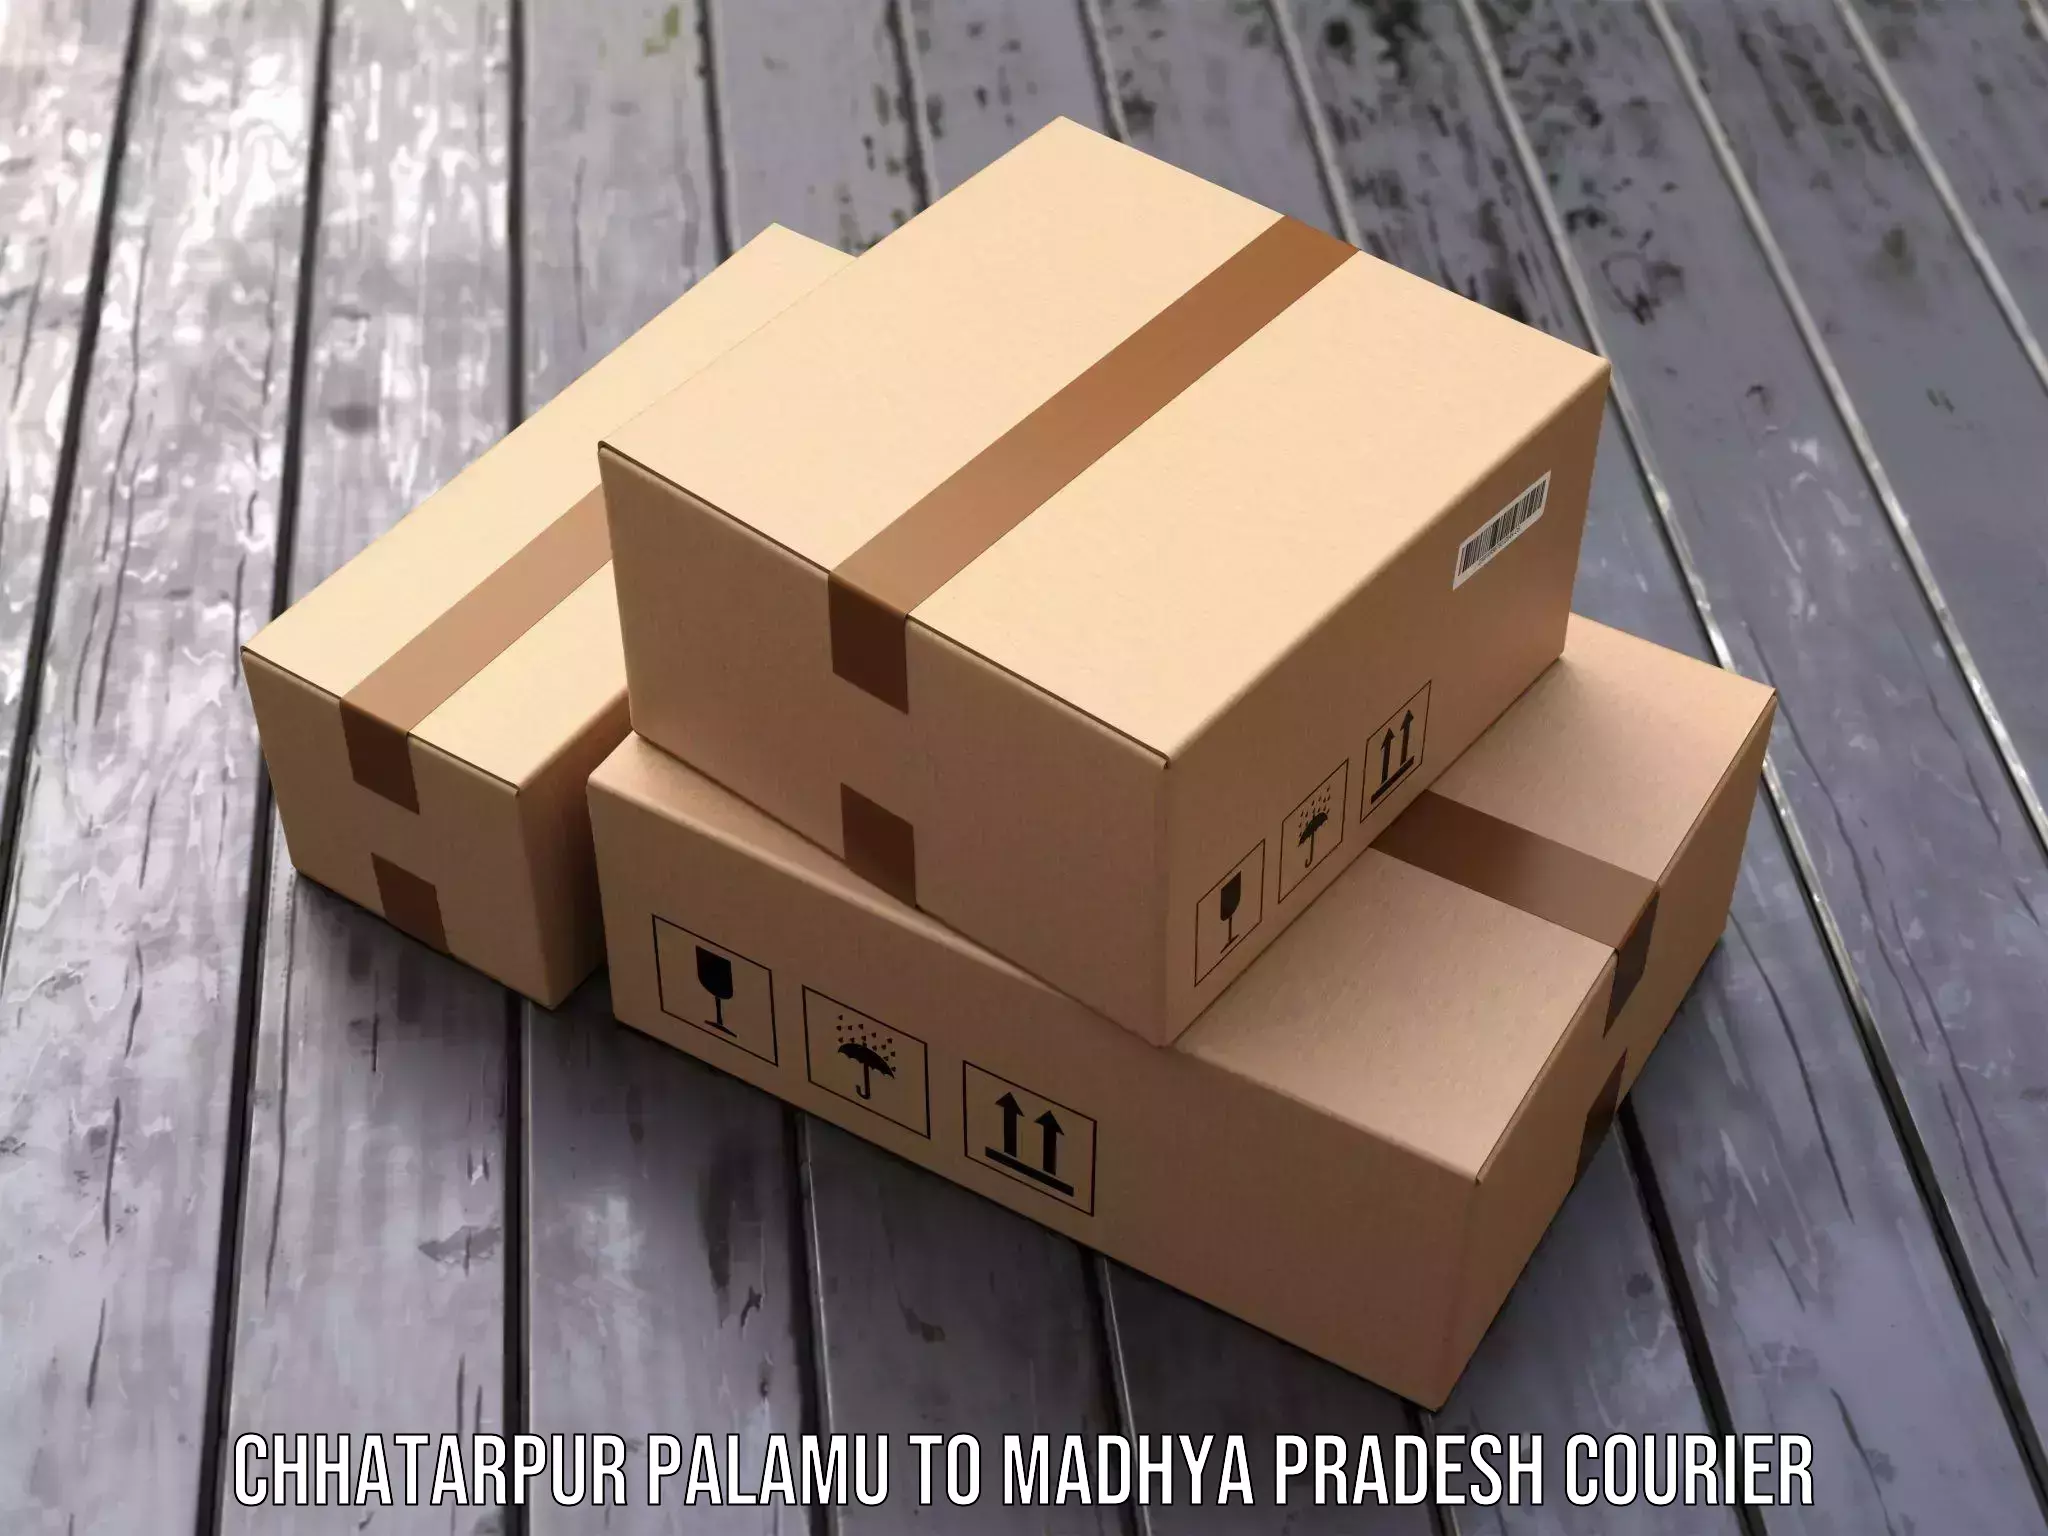 Digital courier platforms Chhatarpur Palamu to Udaipura